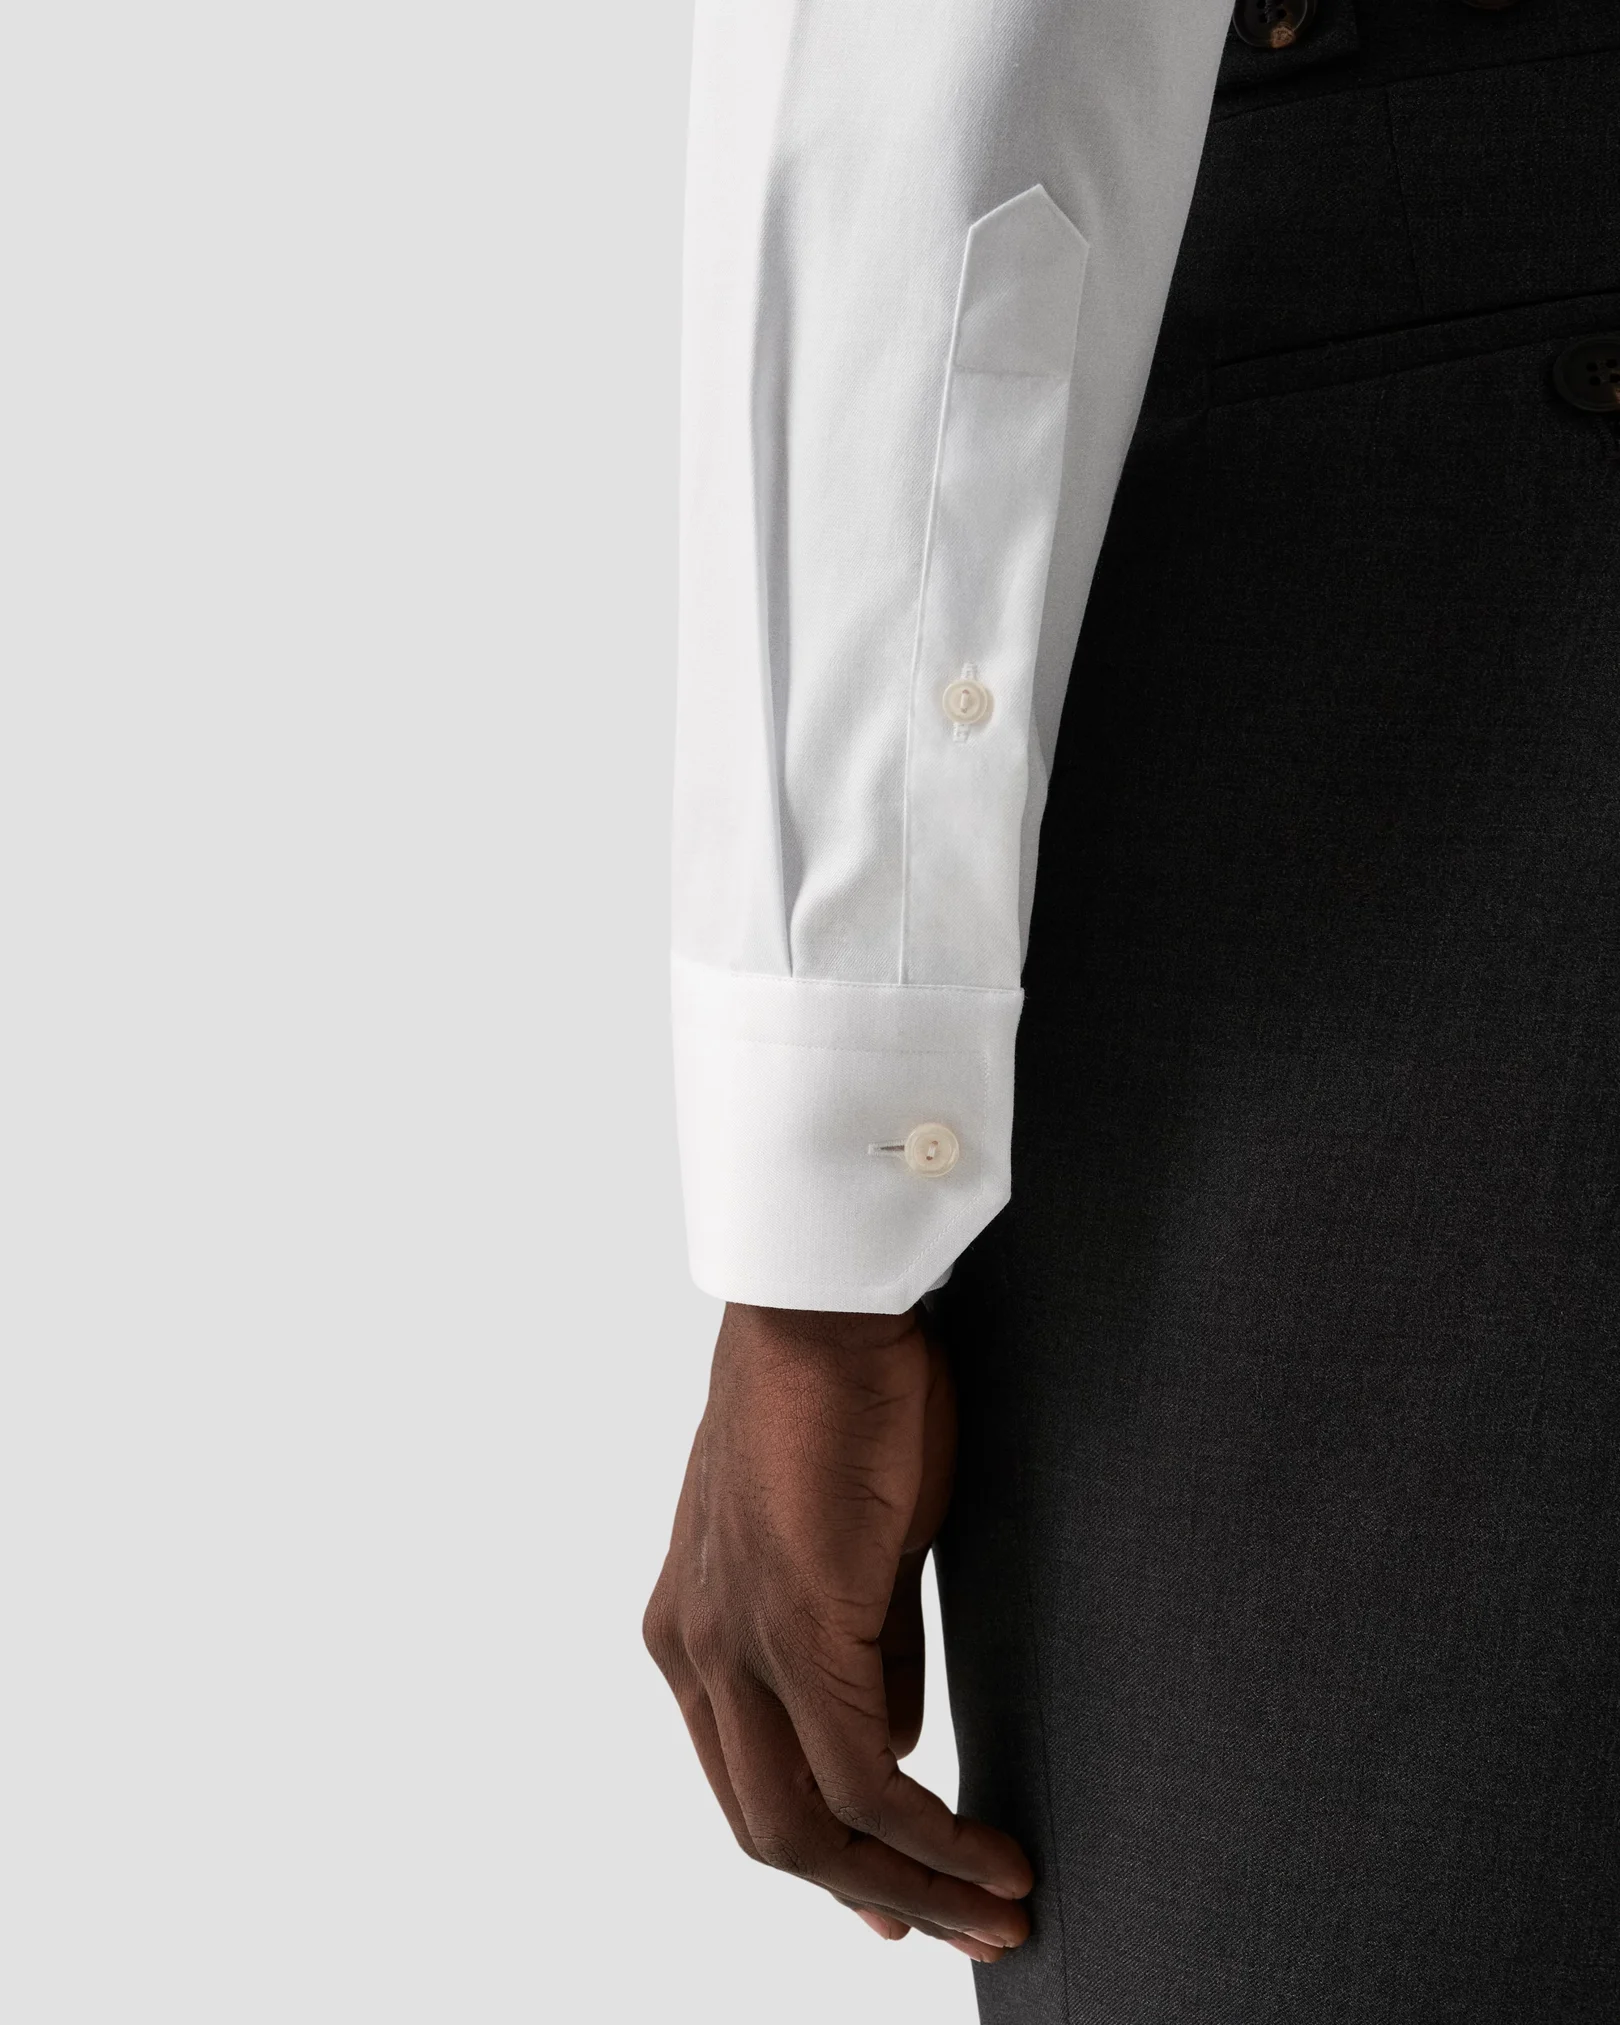 Eton - white signature twill embroidery shirt